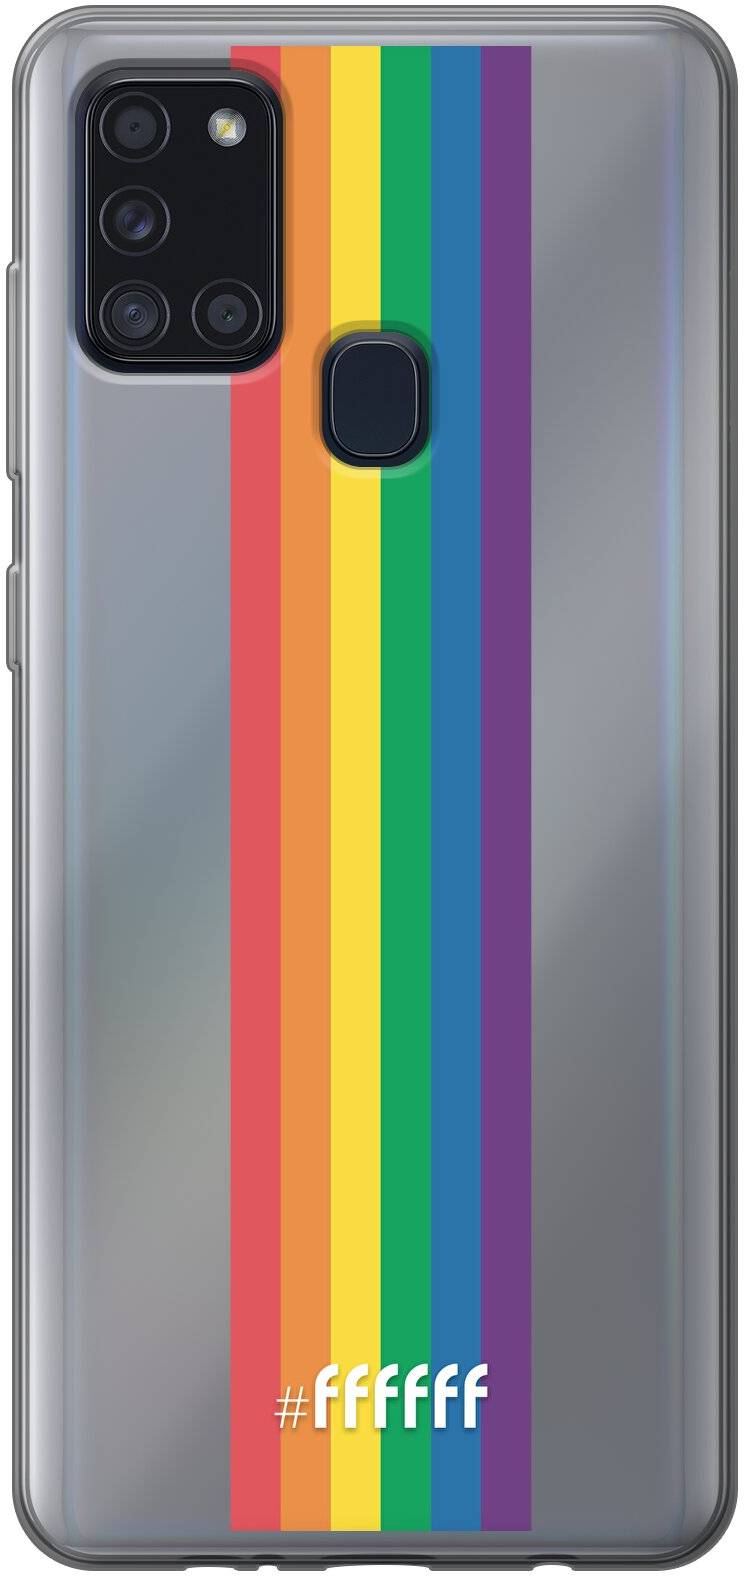 #LGBT - Vertical Galaxy A21s